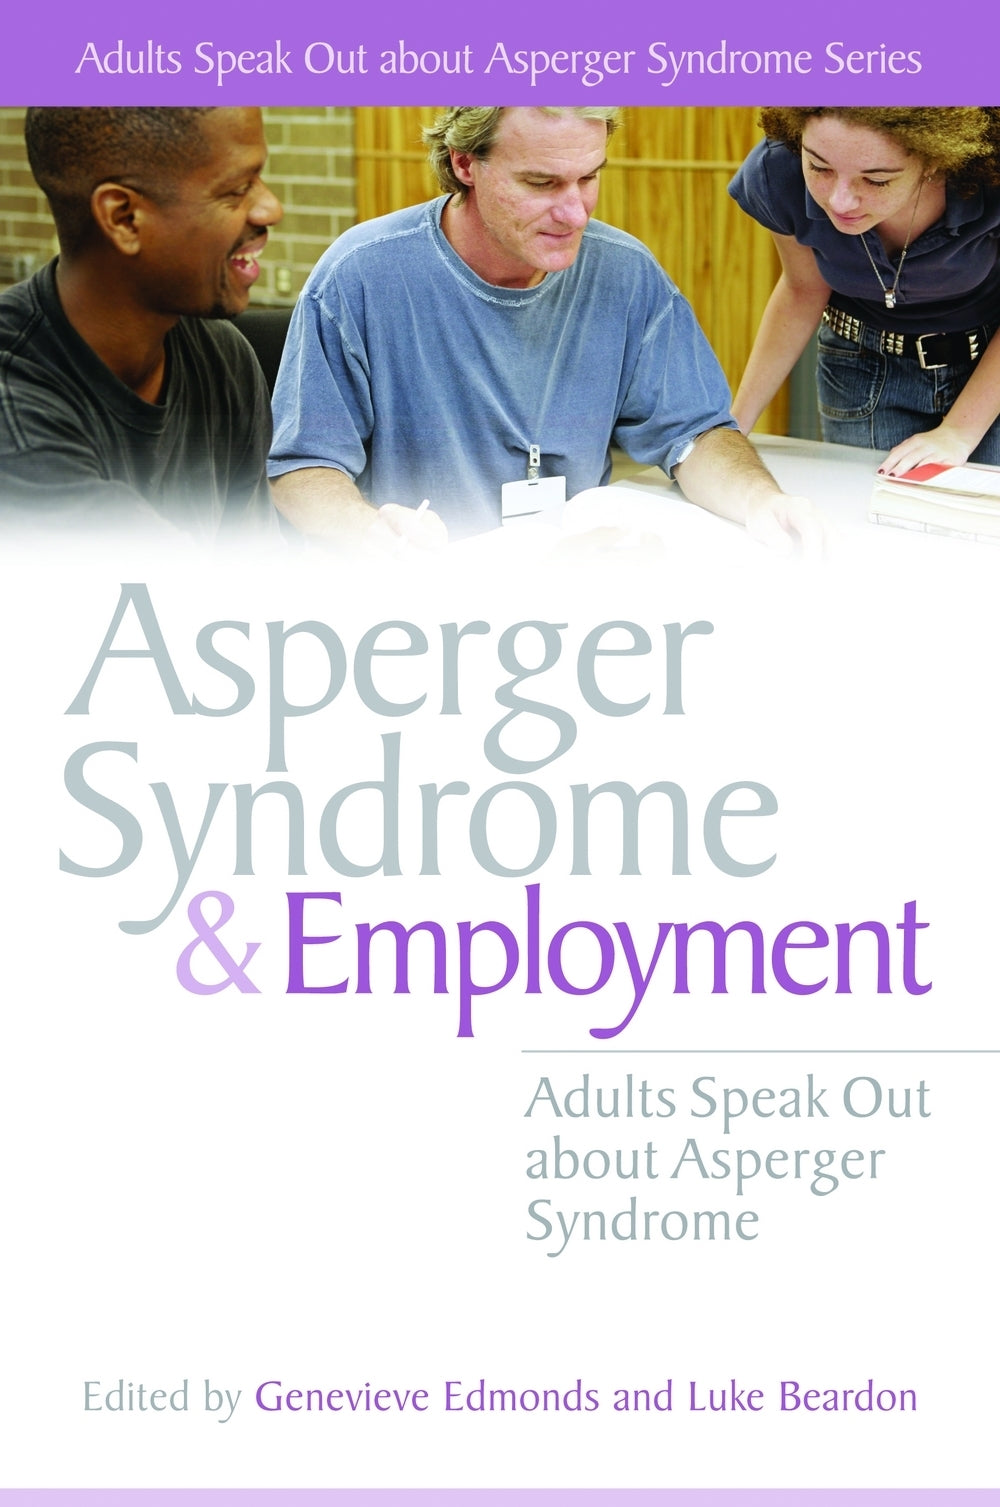 Asperger Syndrome and Employment by Luke Beardon, Genevieve Edmonds, No Author Listed